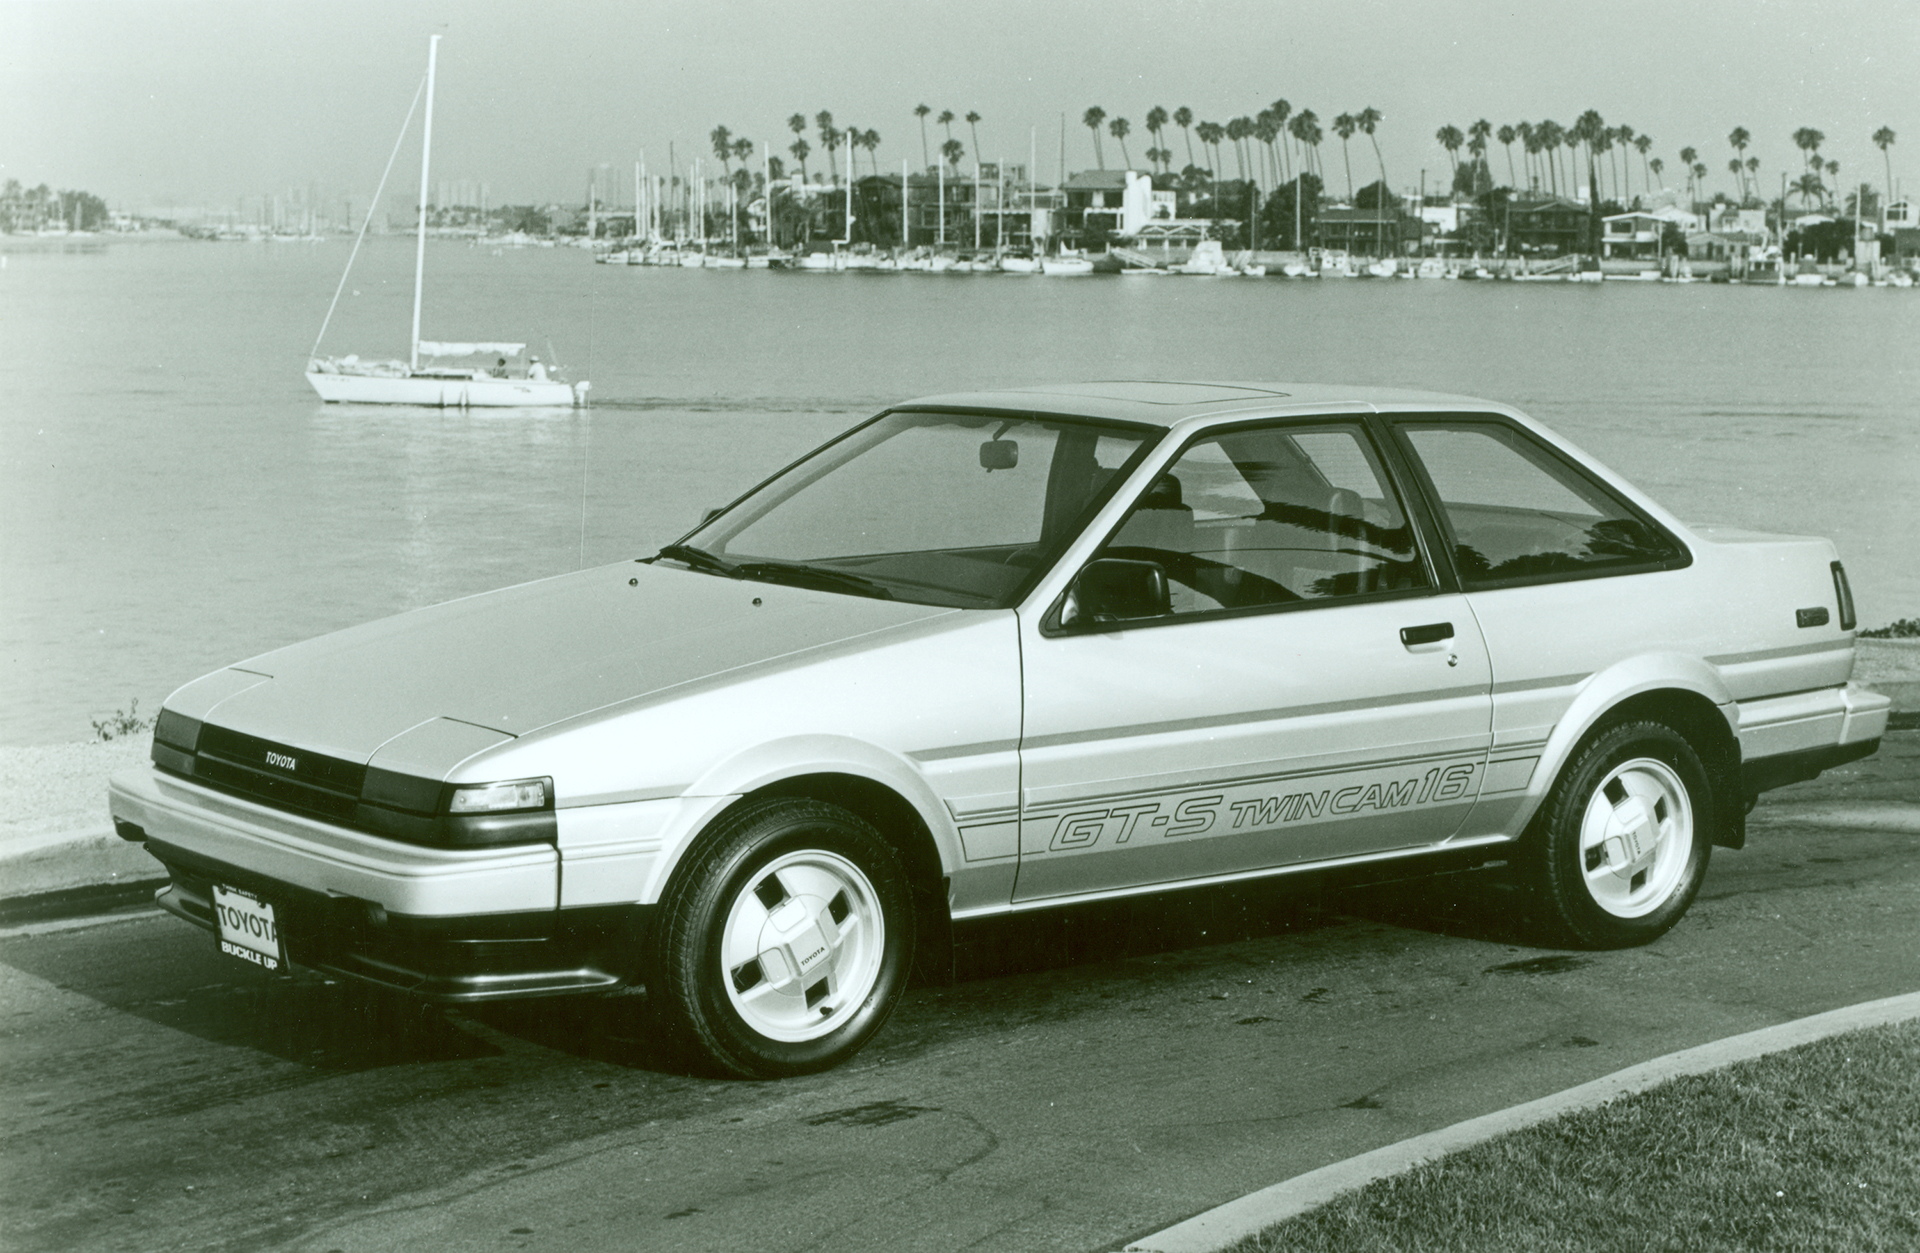 USA - The 5th Generation Corolla (1984 - 1987)